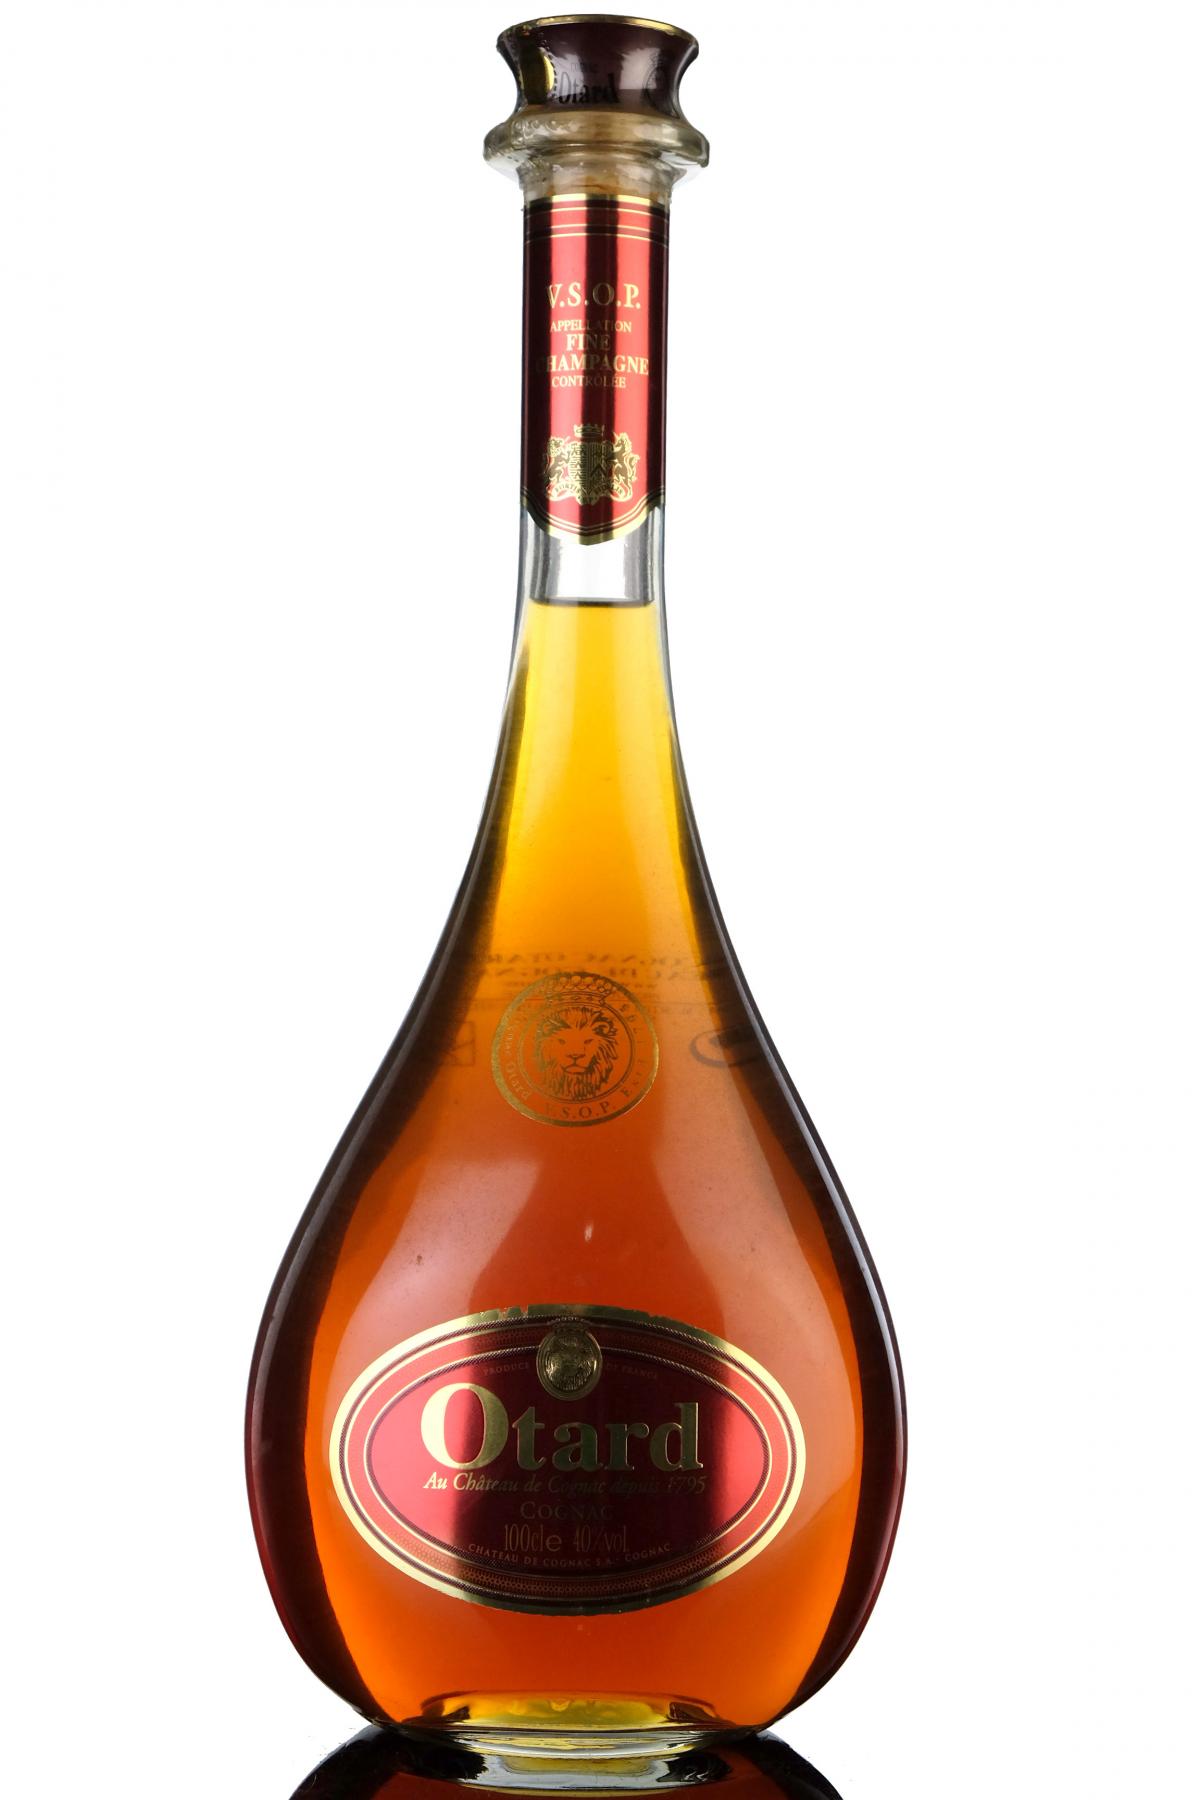 Otard VSOP Fine Champagne Cognac - 1 Litre